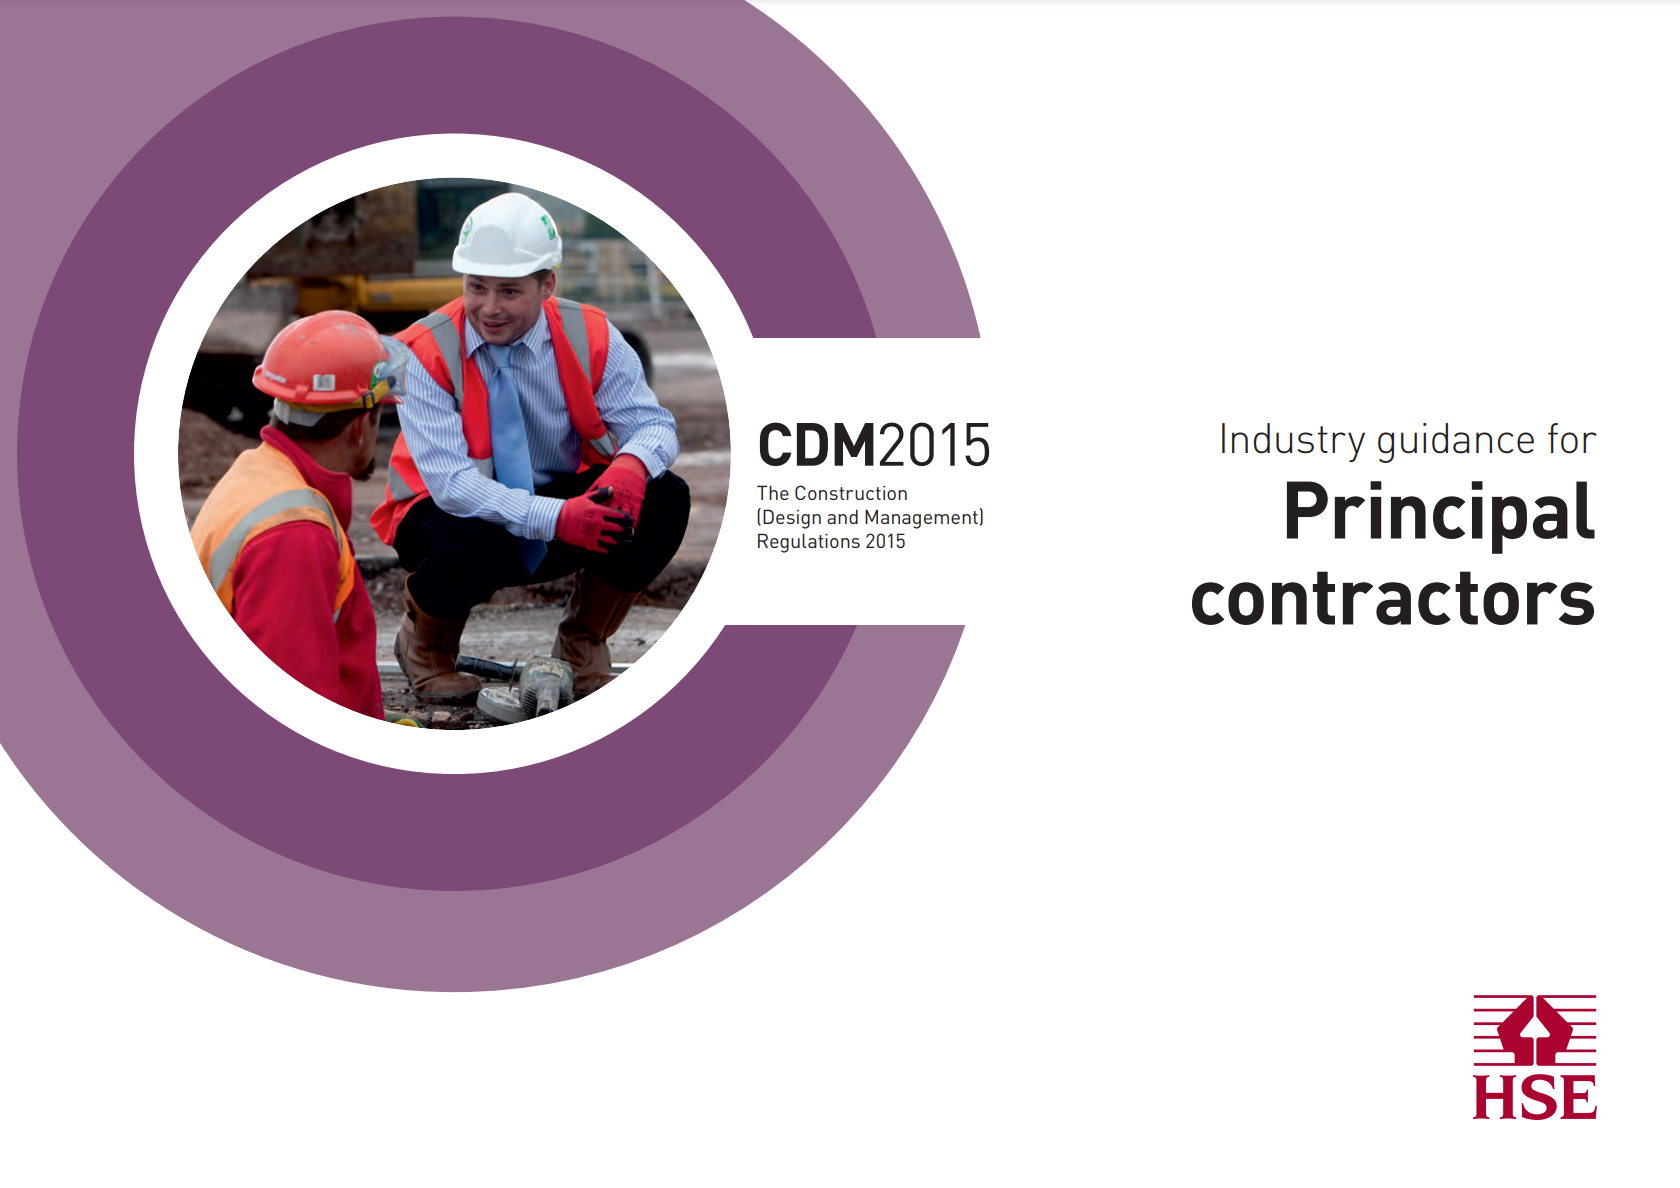 CDM2015-Industry guidance for Principle Contractors